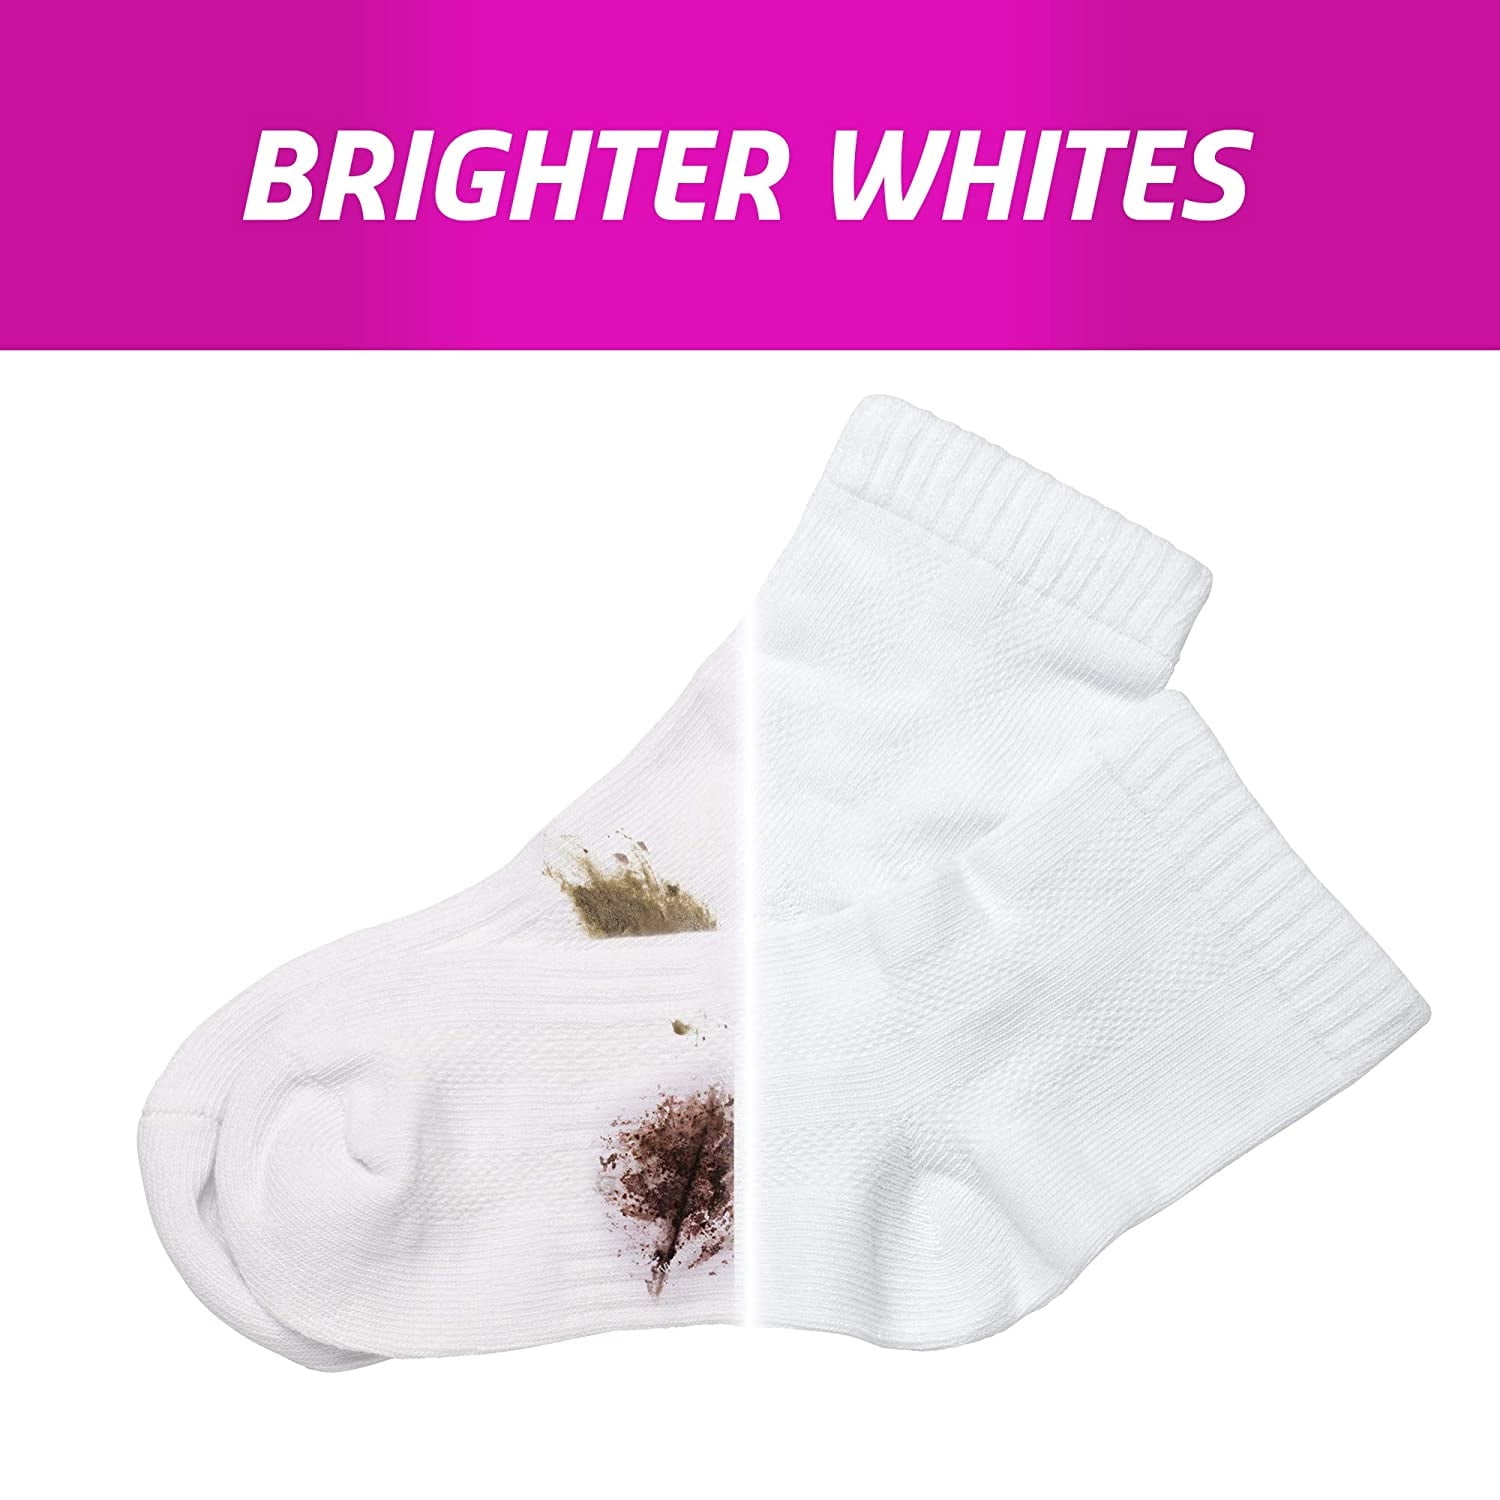 Vanish Oxi Action Powder for white cloths 470 g — buy in Ramat Gan